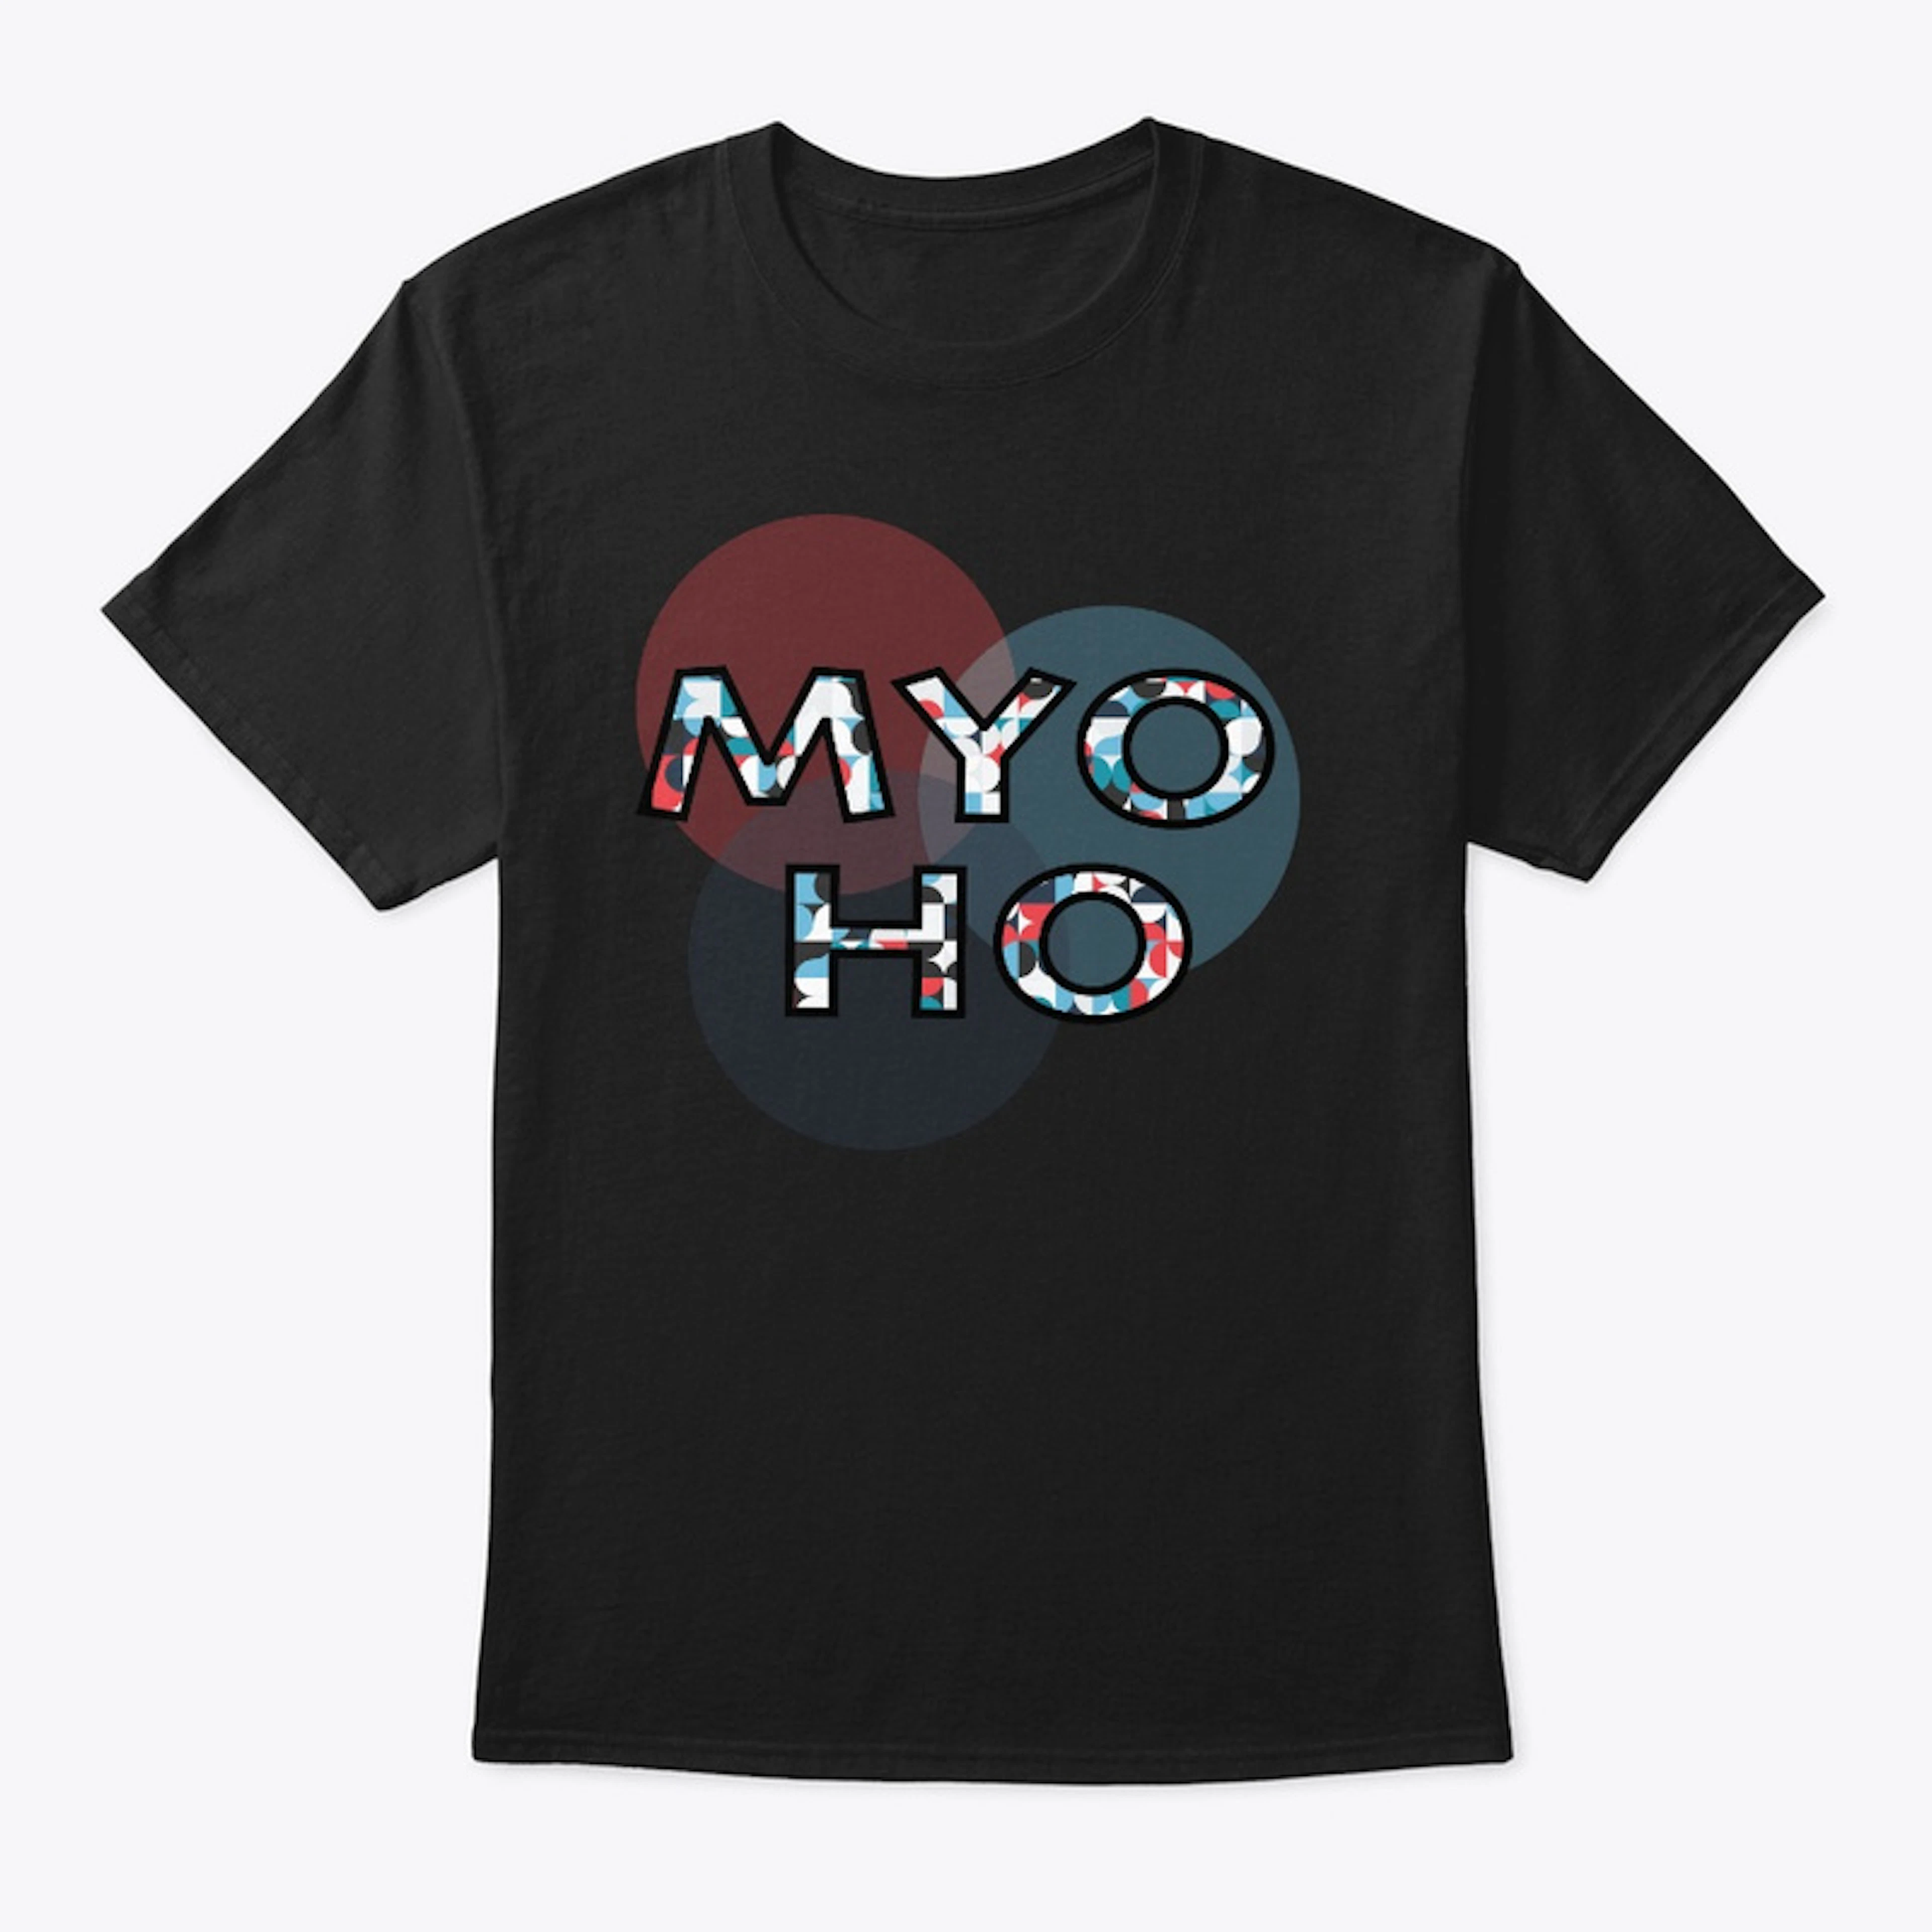 Myoho Tee Shirt.